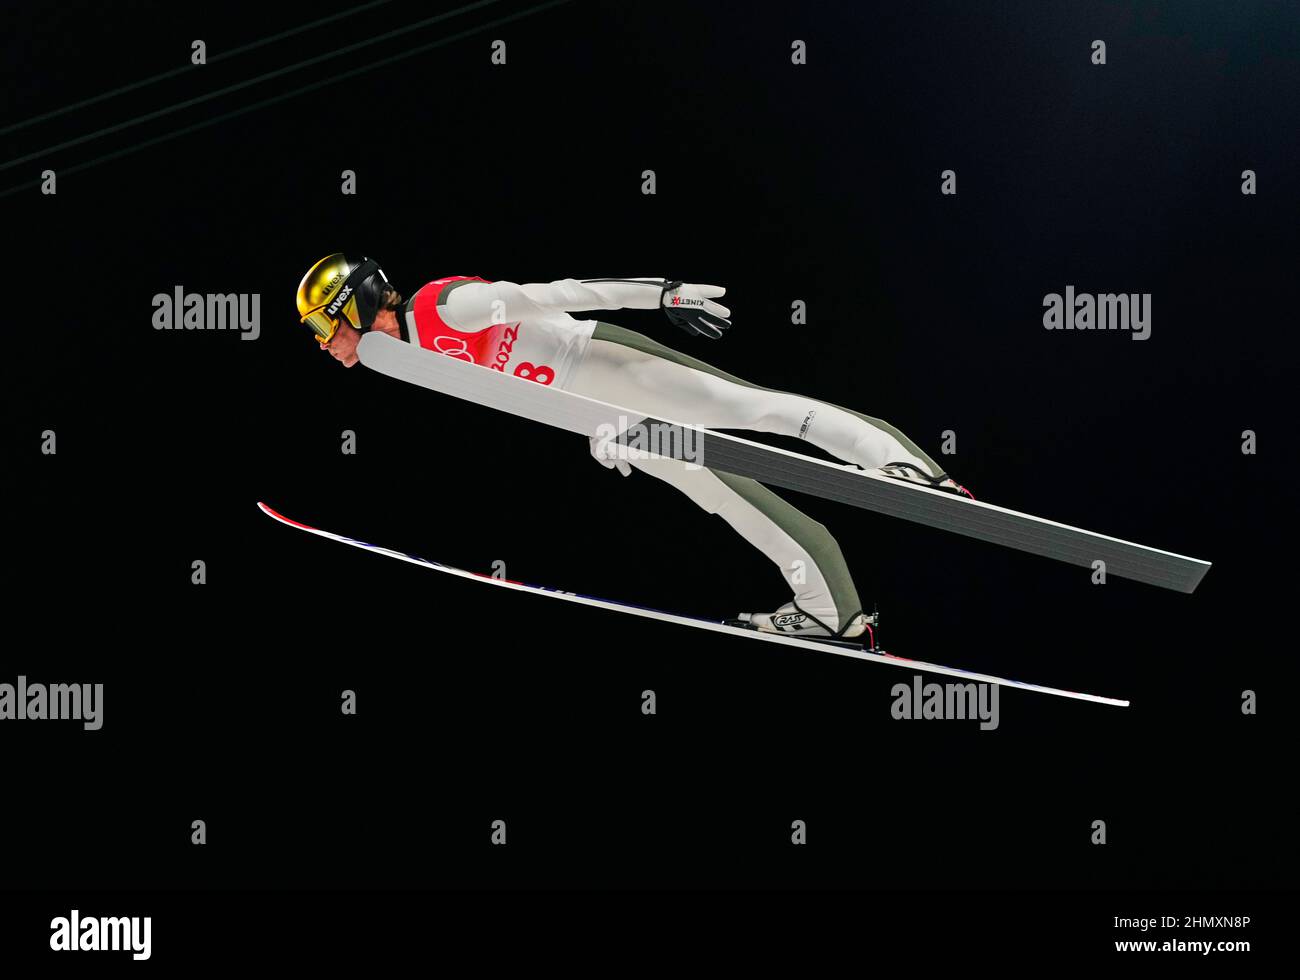 Zhangjiakou, China, 2022 Winter Olympics, February 12, 2022: Daniel Andre Tande from Norway during Ski Jumping at Zhangjiakou Genting Snow Park. Kim Price/CSM. Stock Photo